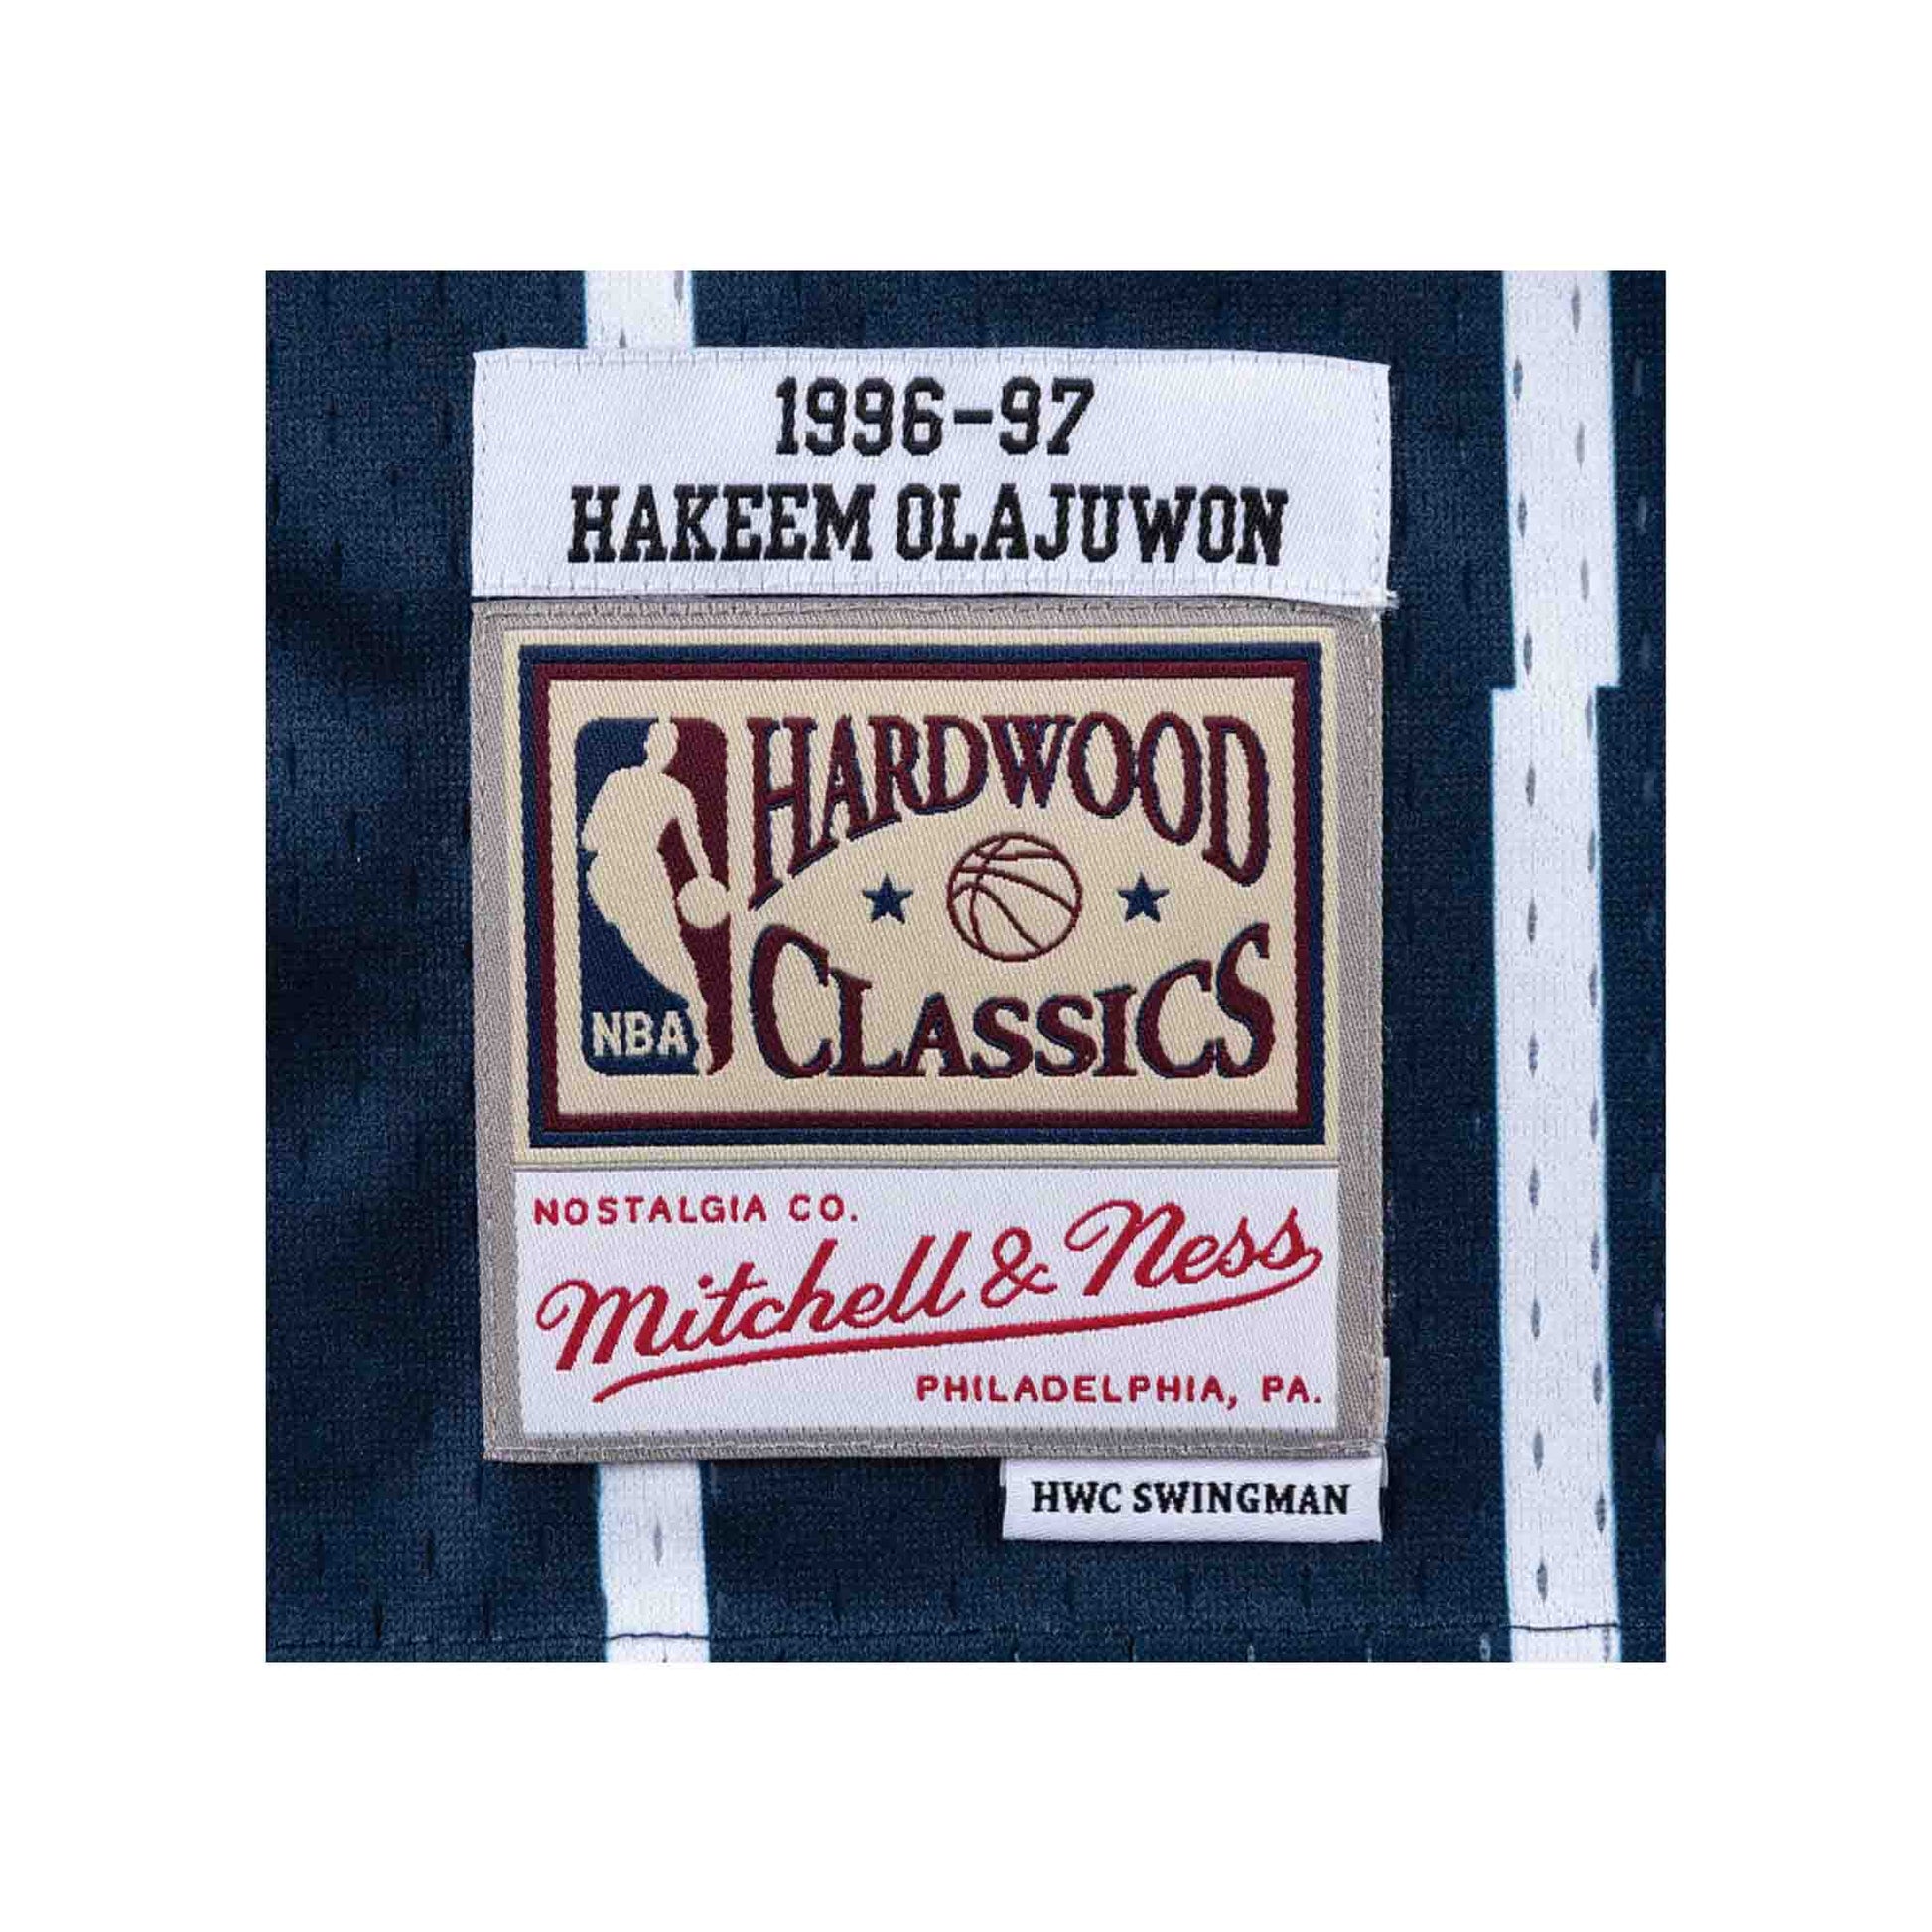 🏀 Hakeem Olajuwon Houston Rockets Road 1996-97 Jersey – The